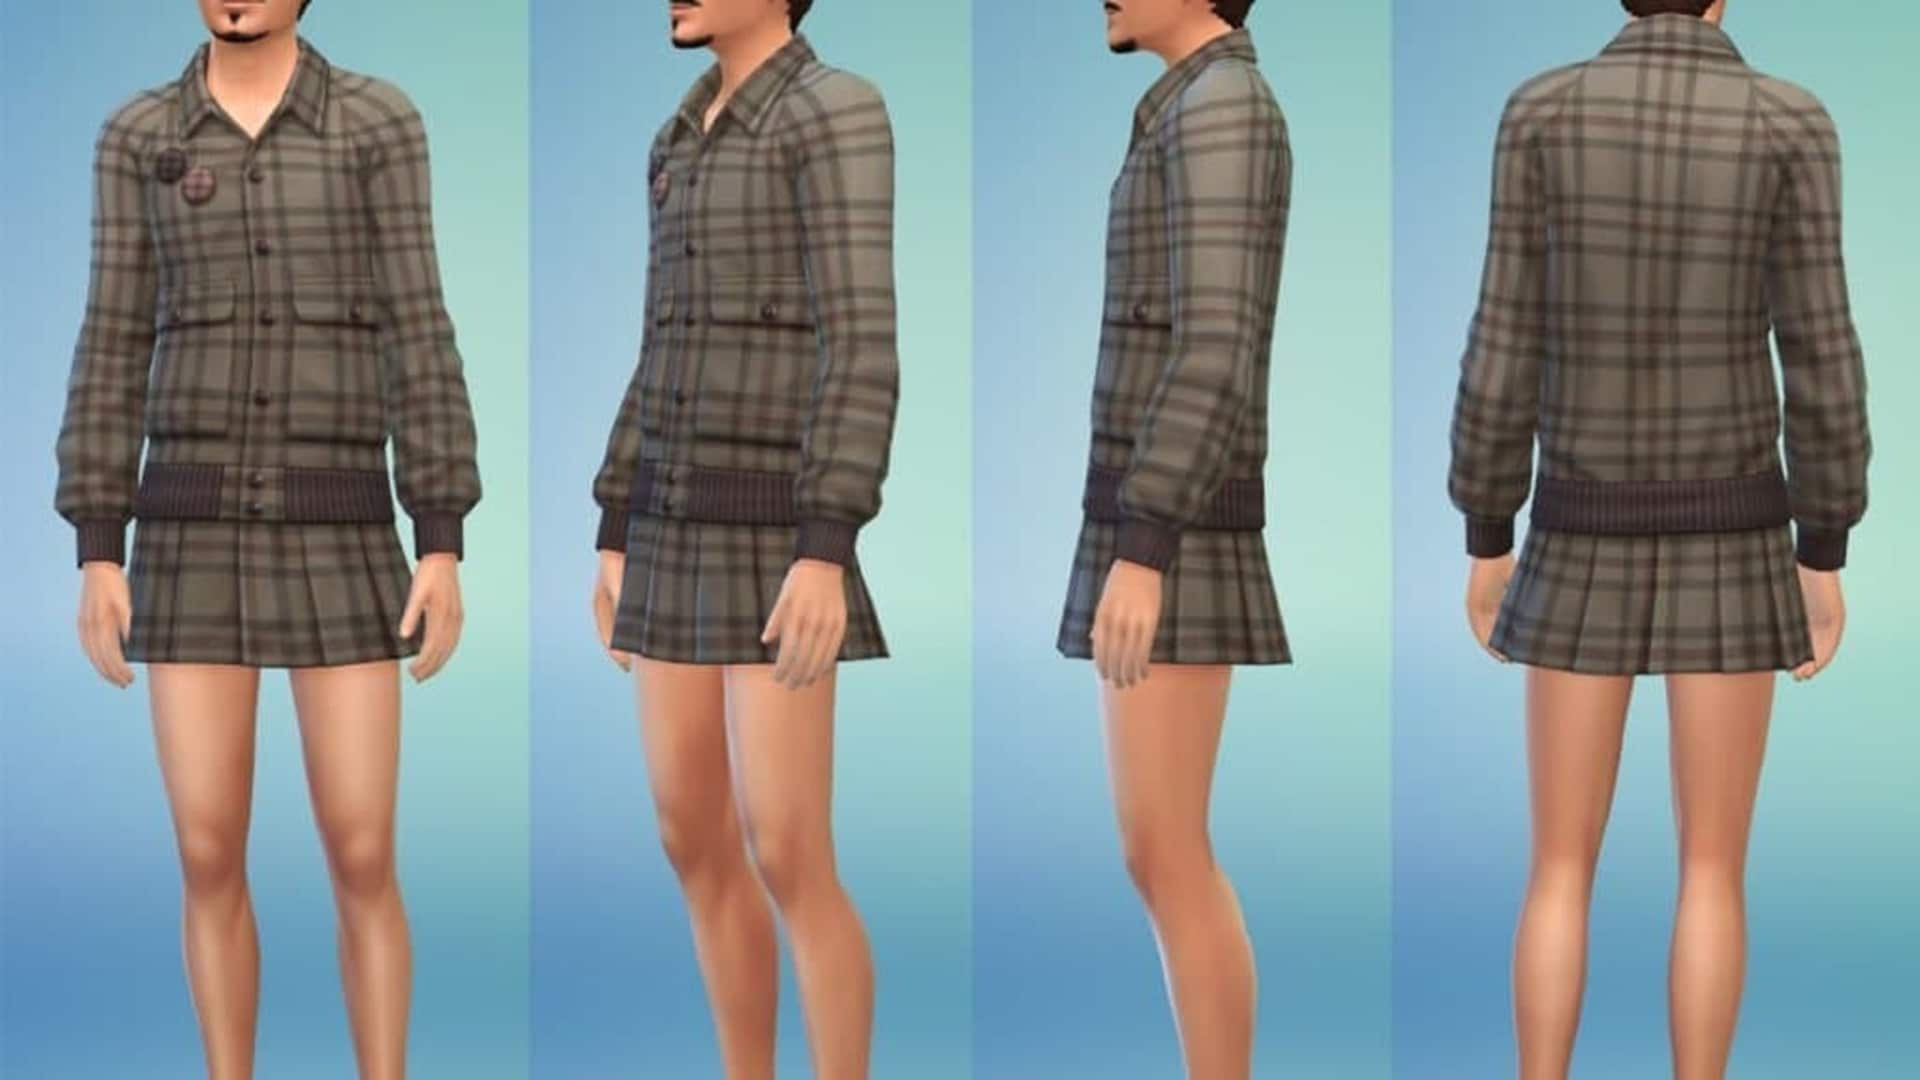 Los Sims 4 agrega faldas masculinas en el próximo kit, GamersRD